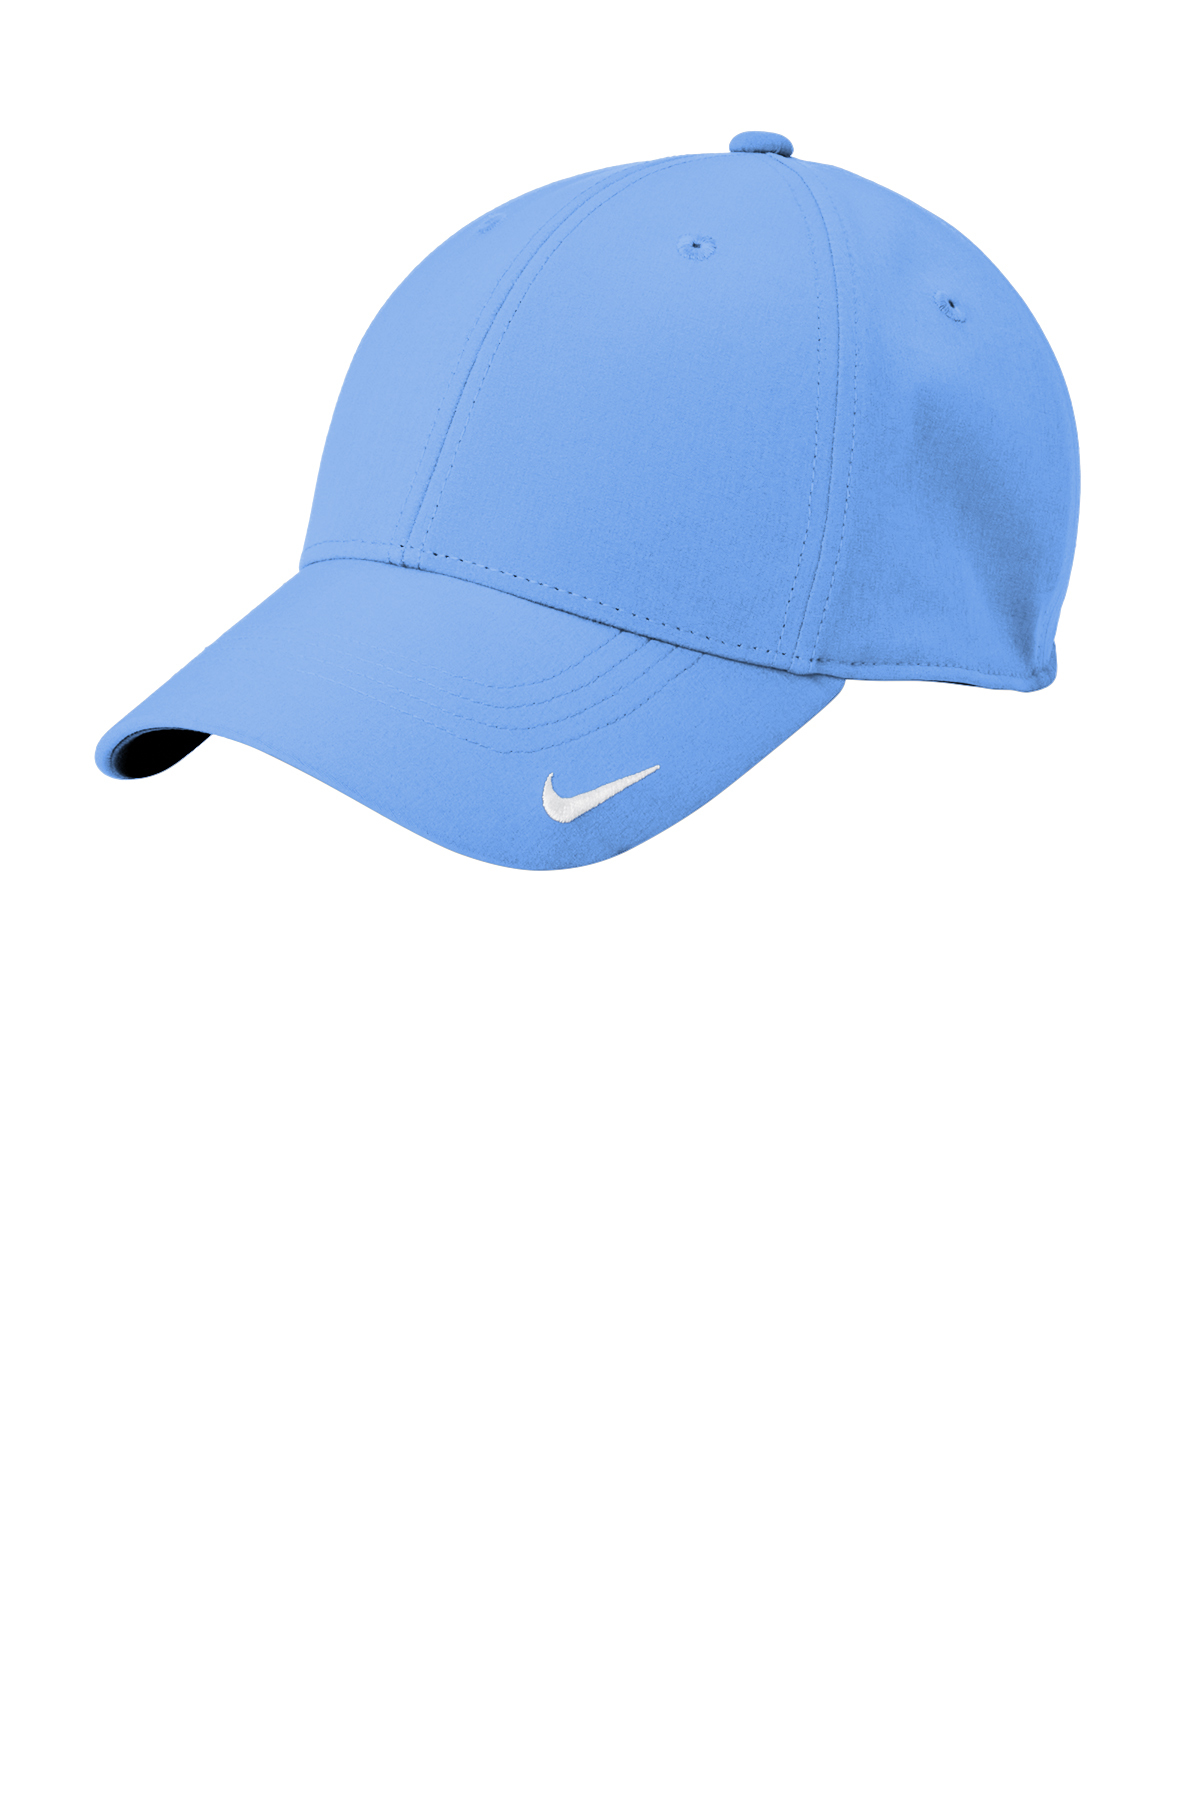 Nike Swoosh Legacy 91 Caps